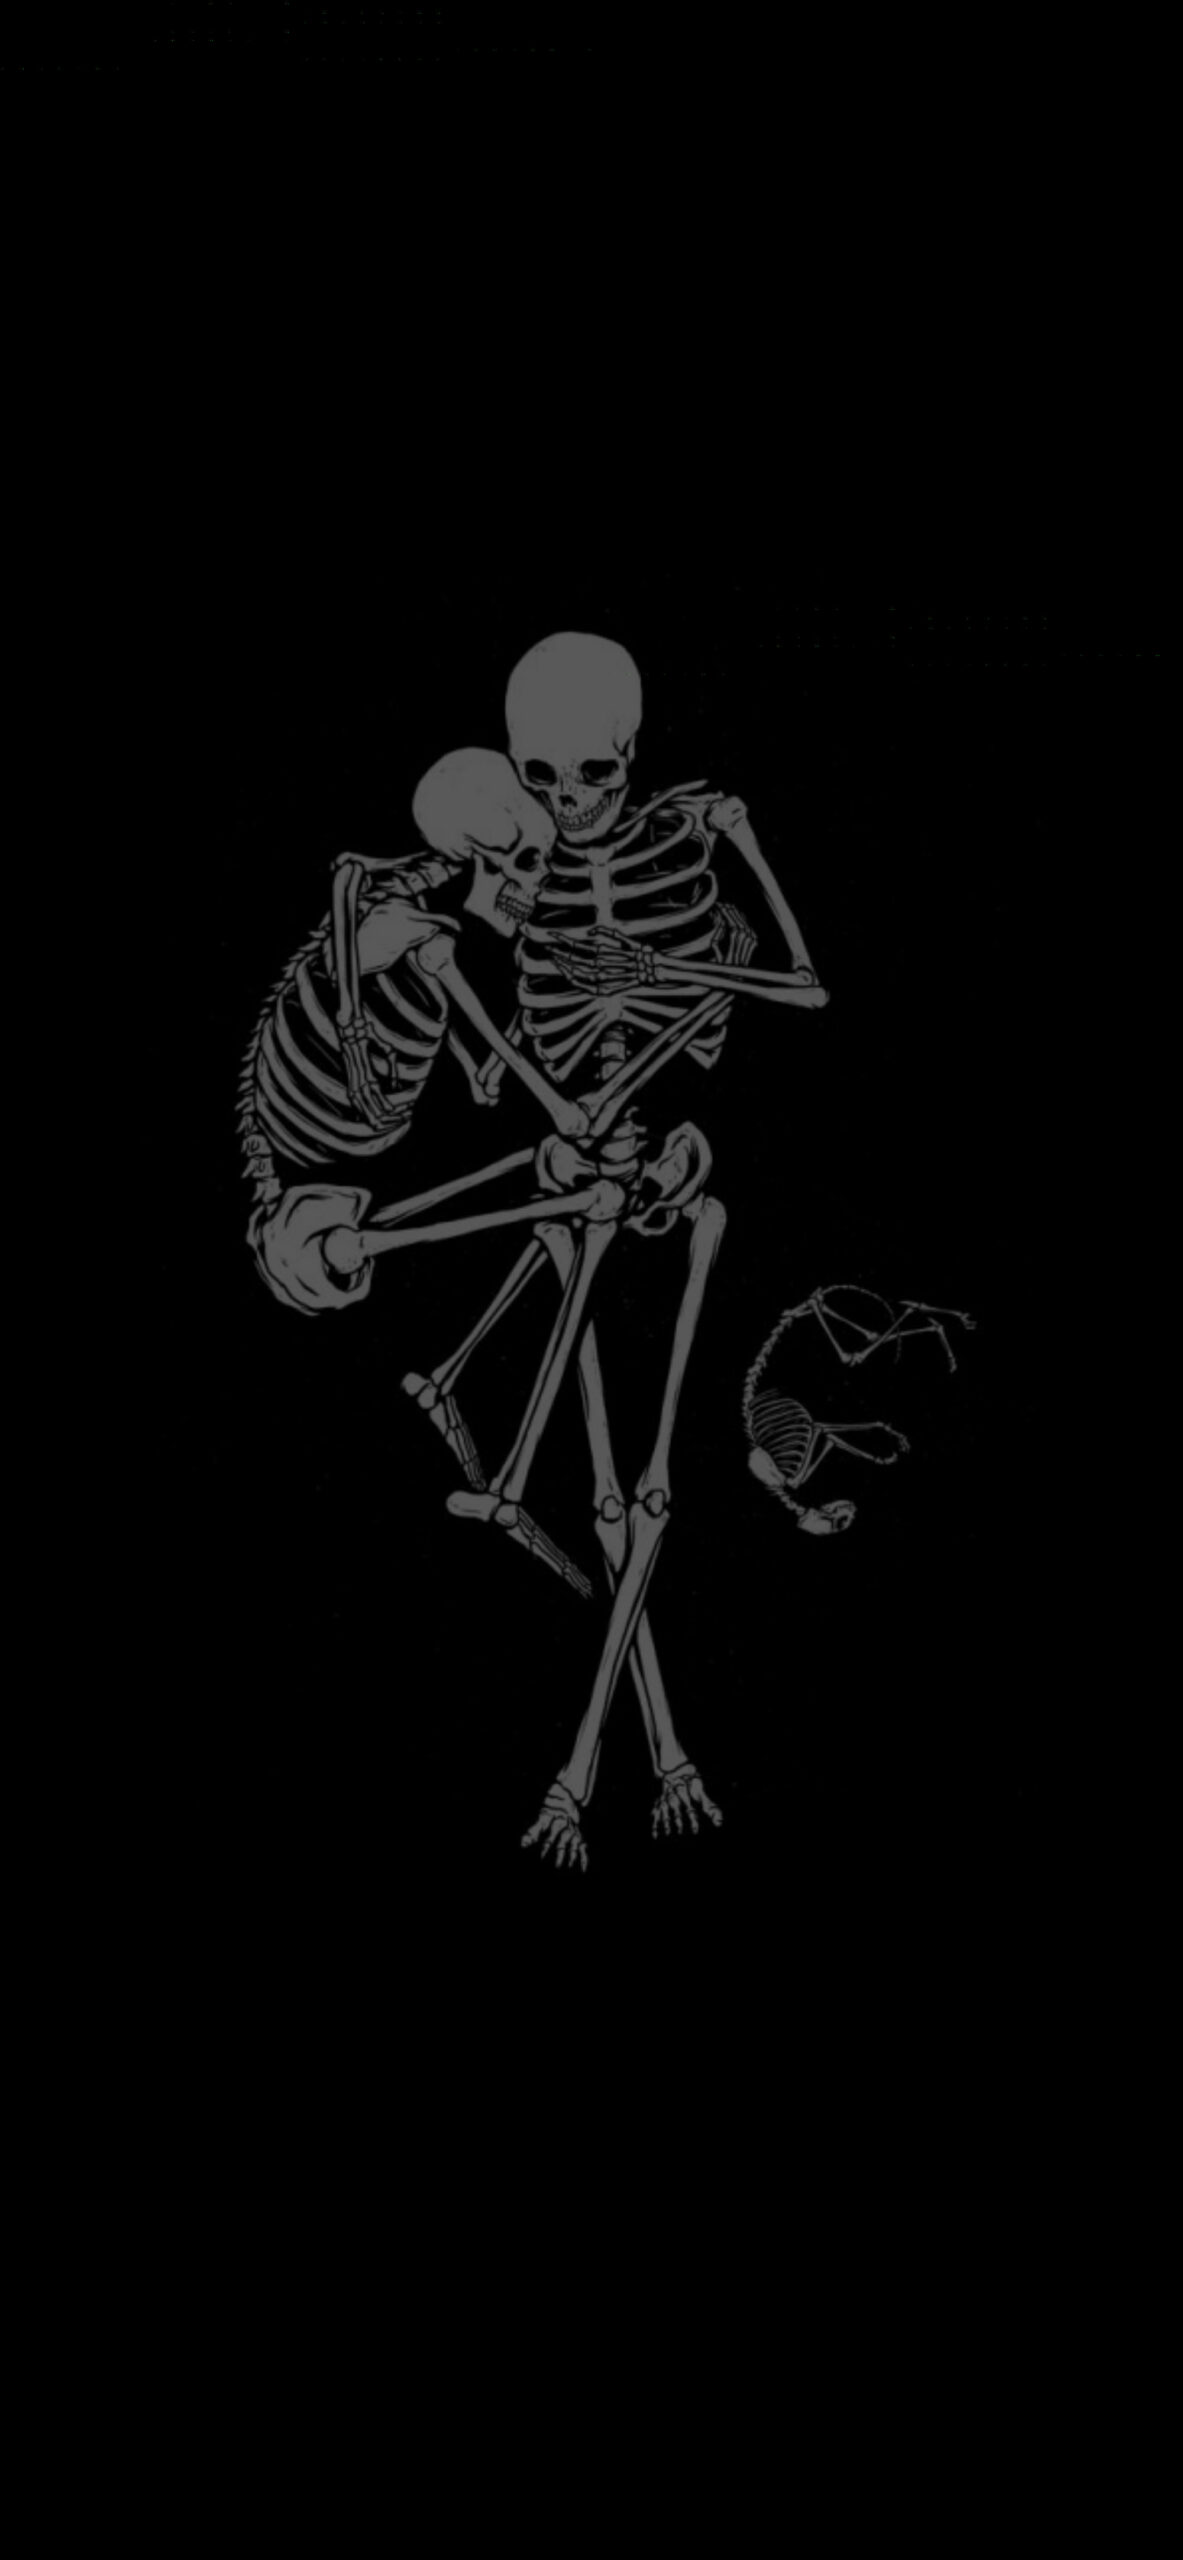 Free download Cool skeleton wallpapers Skull wallpaper Dark wallpaper  iphone 1080x1920 for your Desktop Mobile  Tablet  Explore 23 Awesome  Skeleton Wallpapers  Cool Skeleton Wallpapers Skeleton Wallpapers Skeleton  Wallpaper